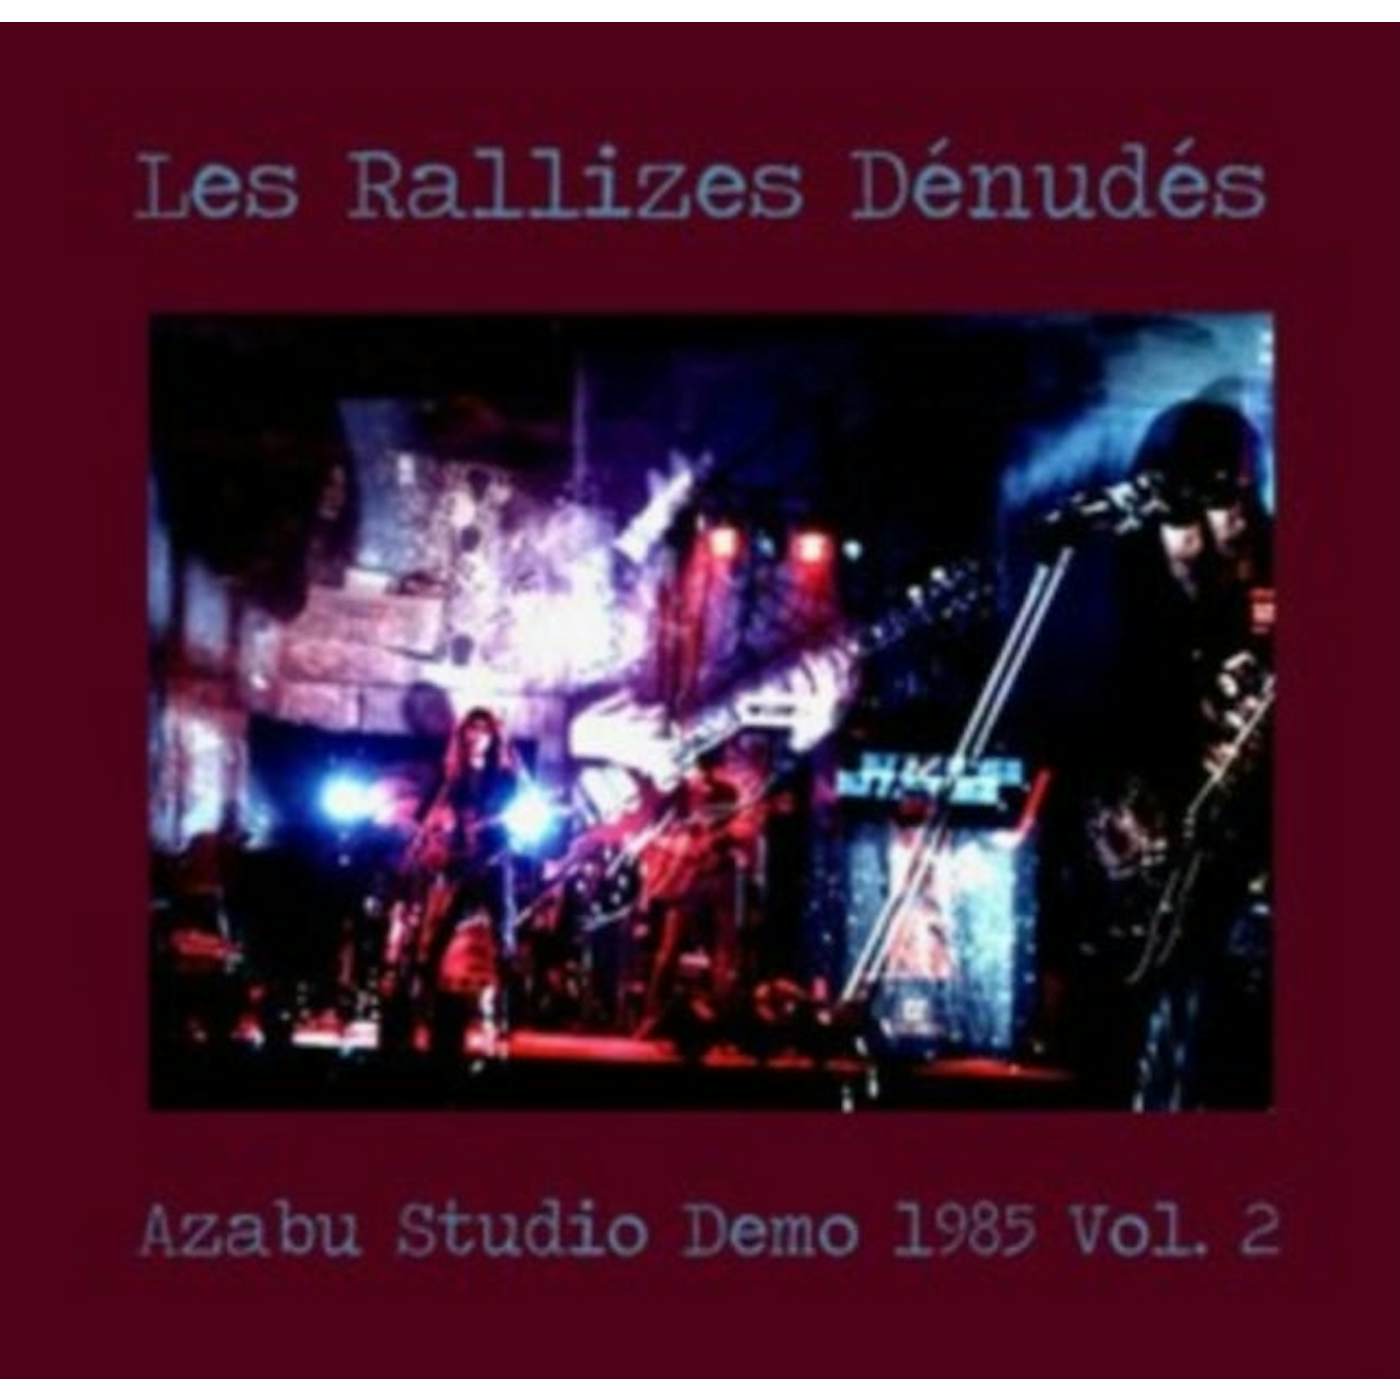 Les Rallizes Dénudés LP Vinyl Record - Azabu Studio Demo 19 85 Vol. 2